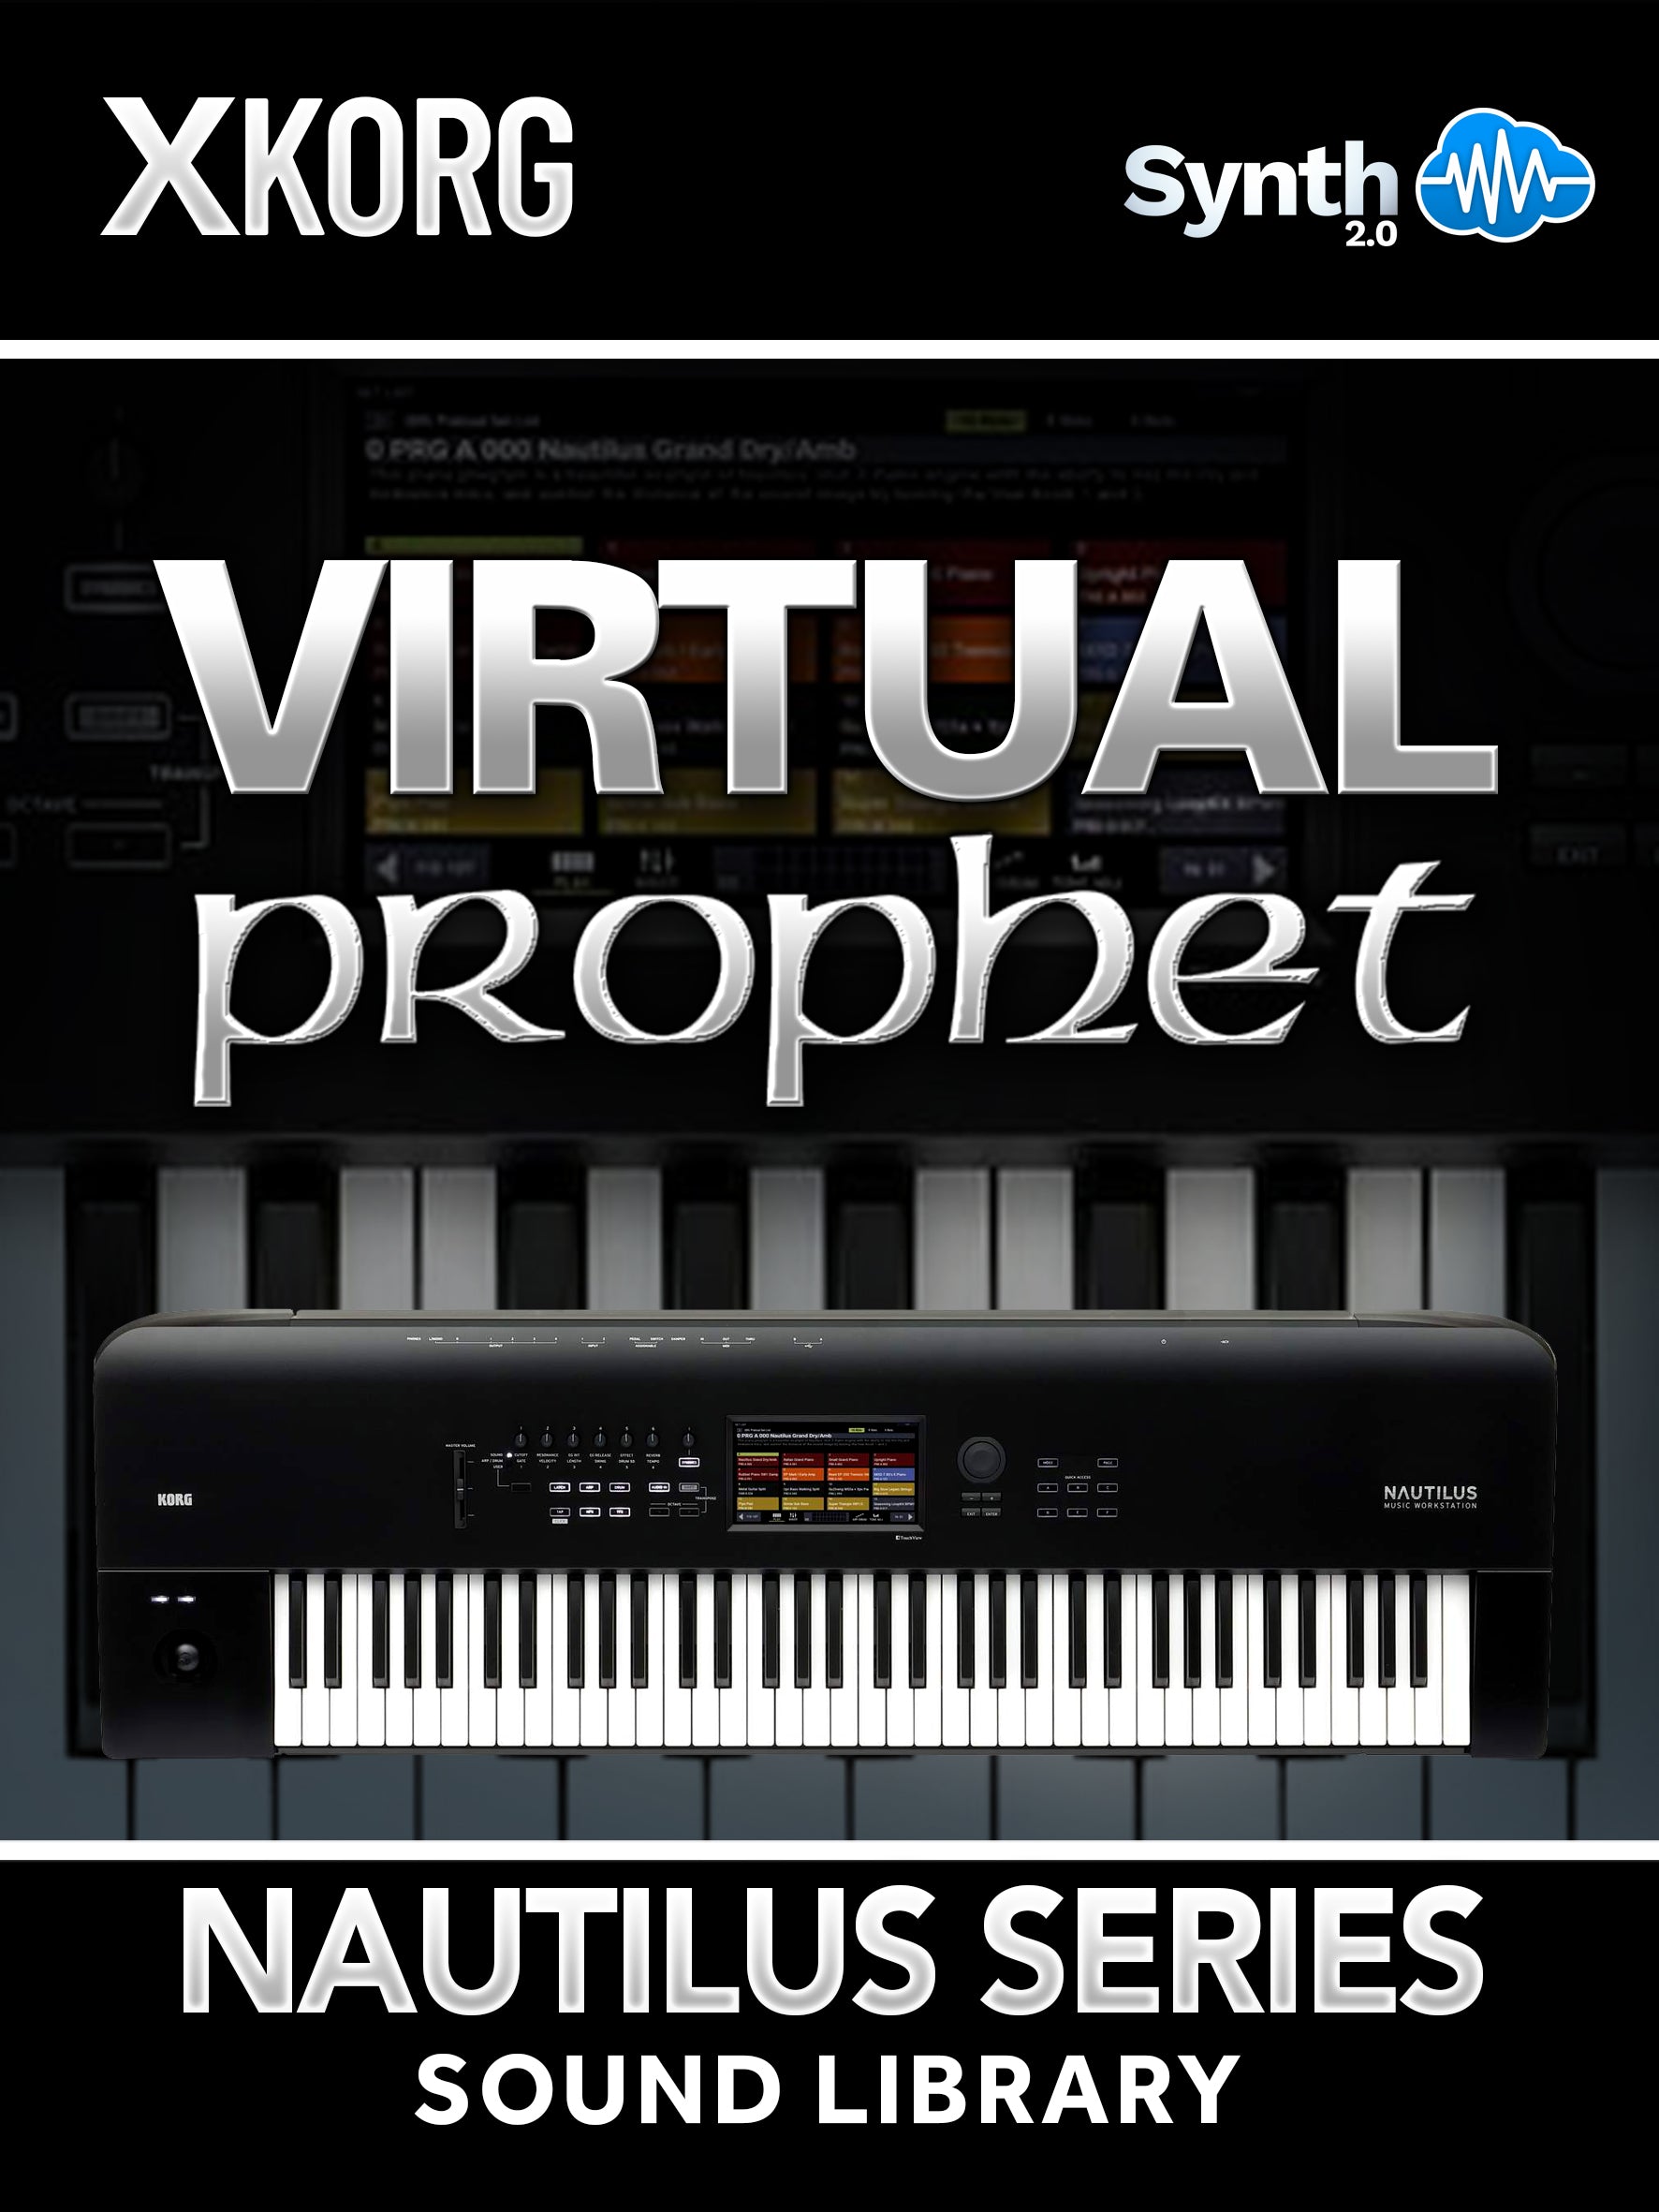 SSX202 - Virtual Prophet - Korg Nautilus Series ( 29 presets )